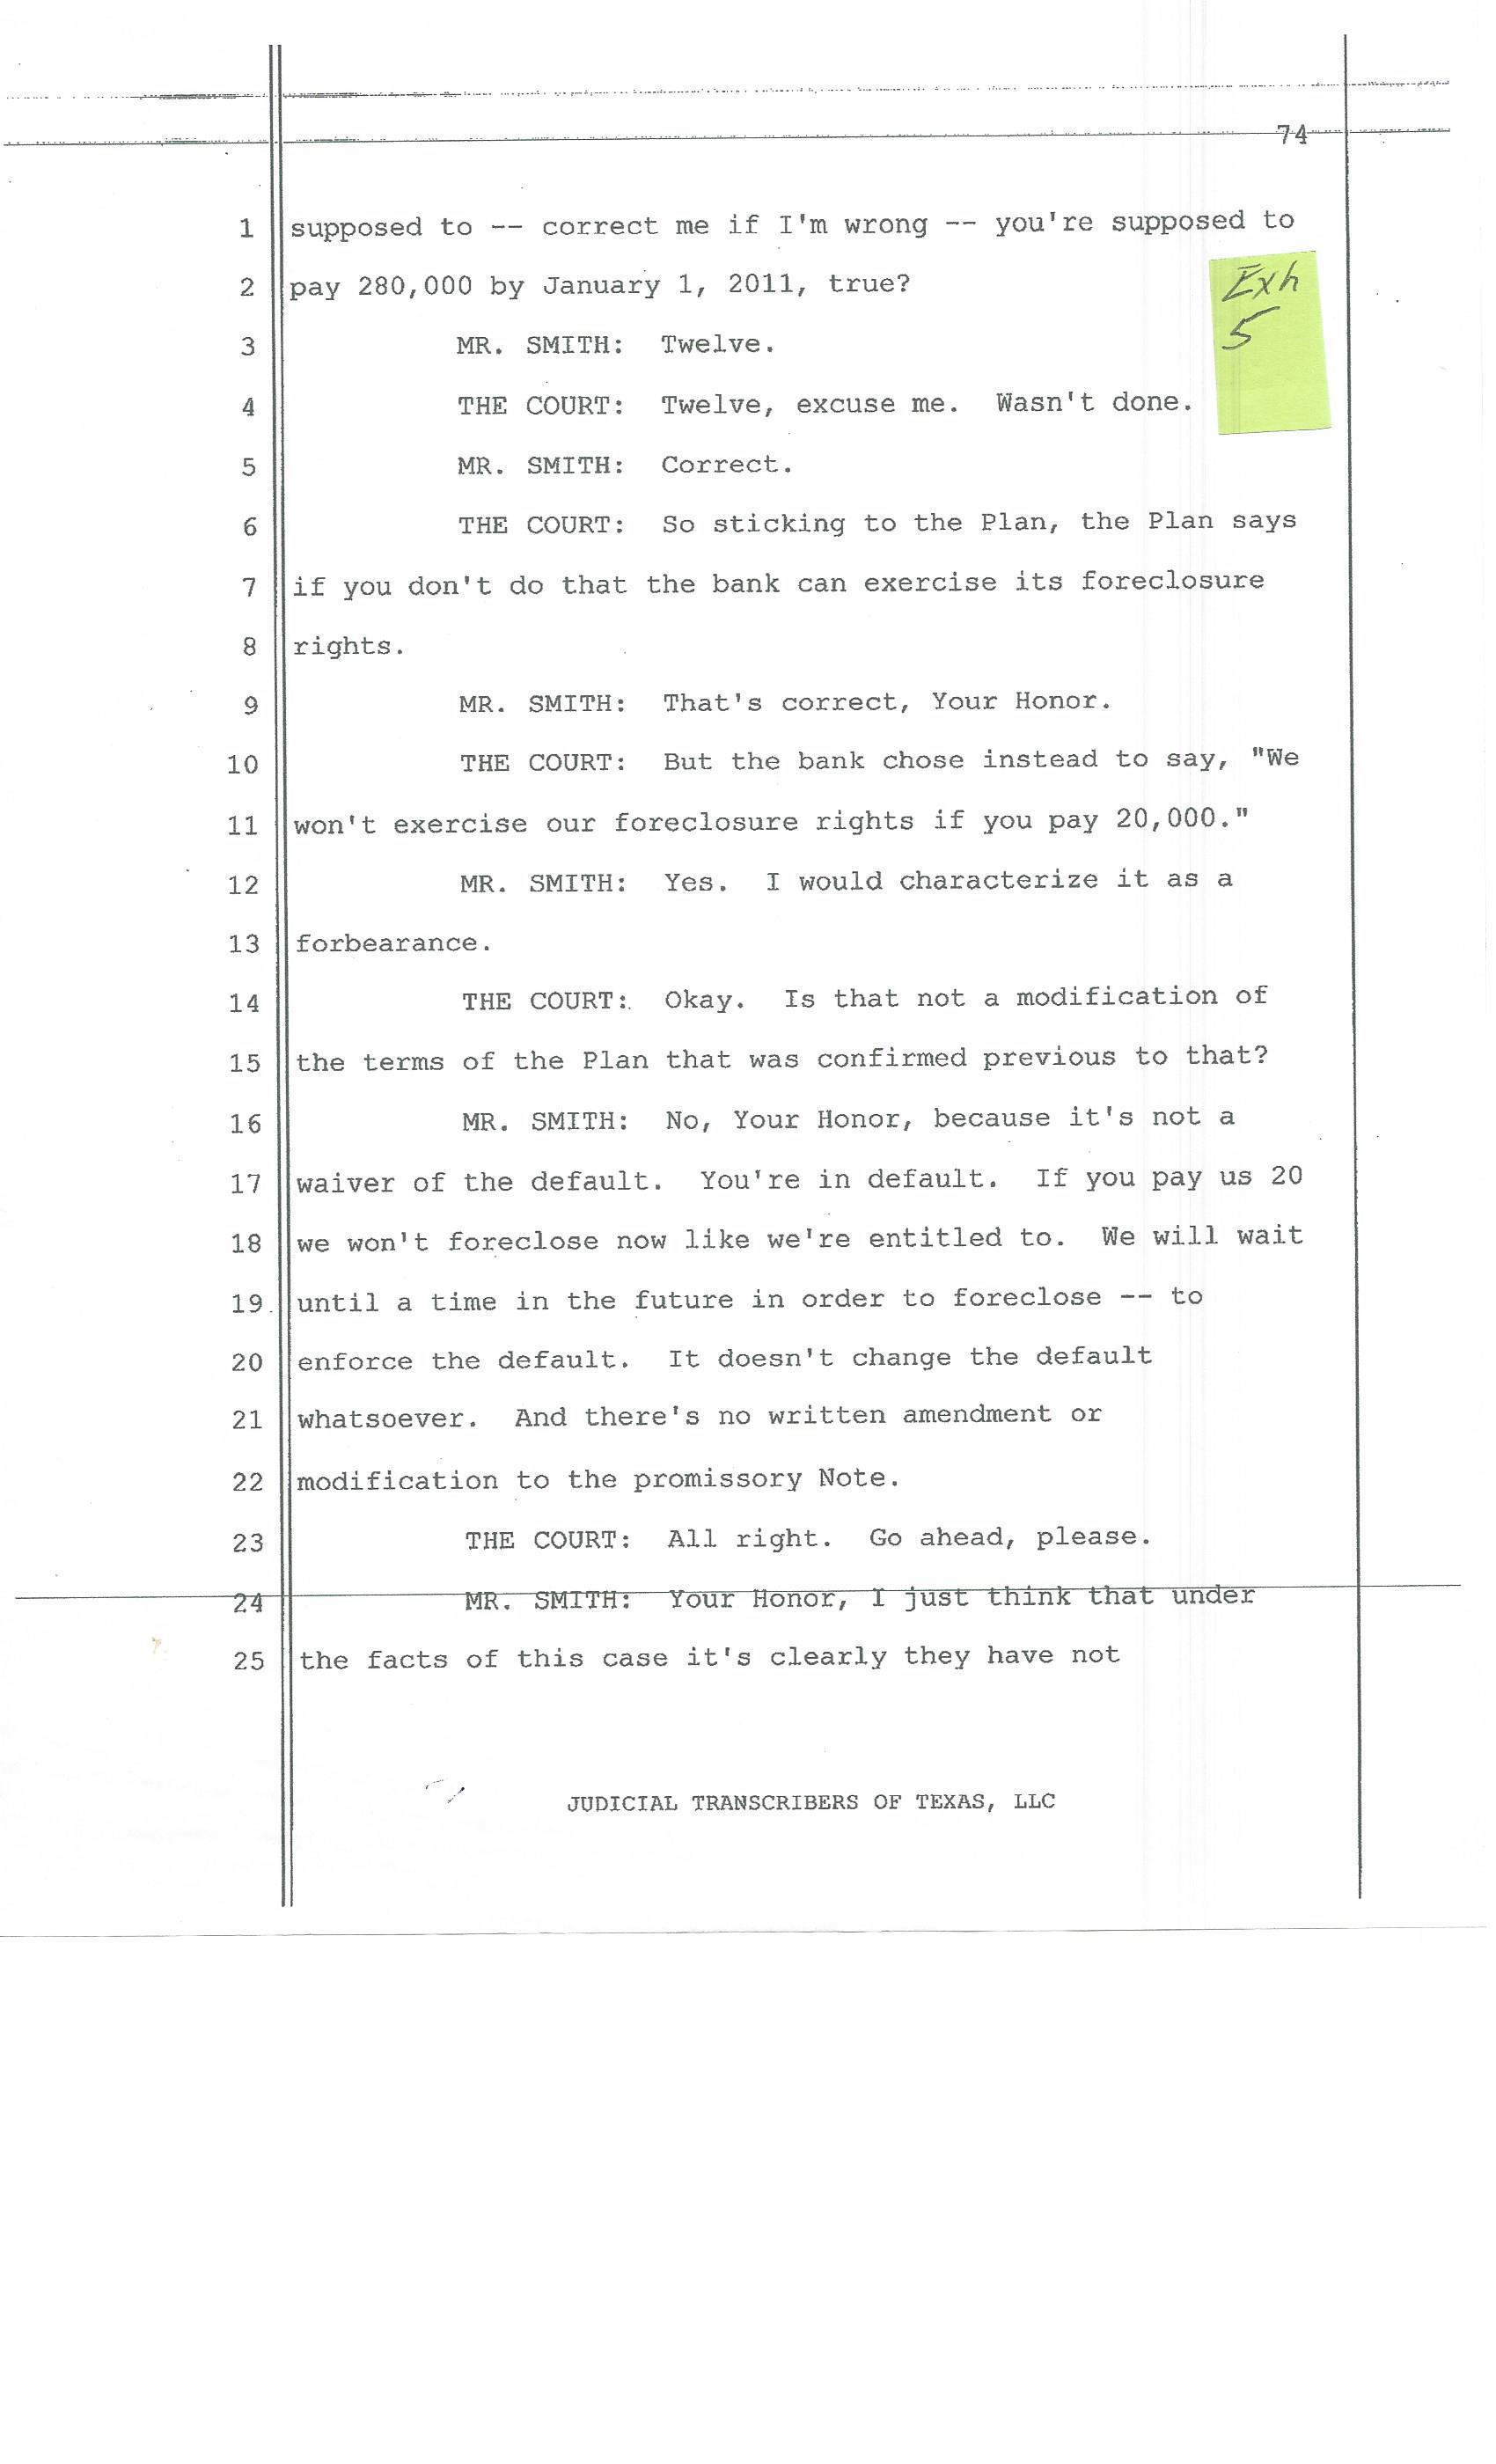 David Smith testimony page 74